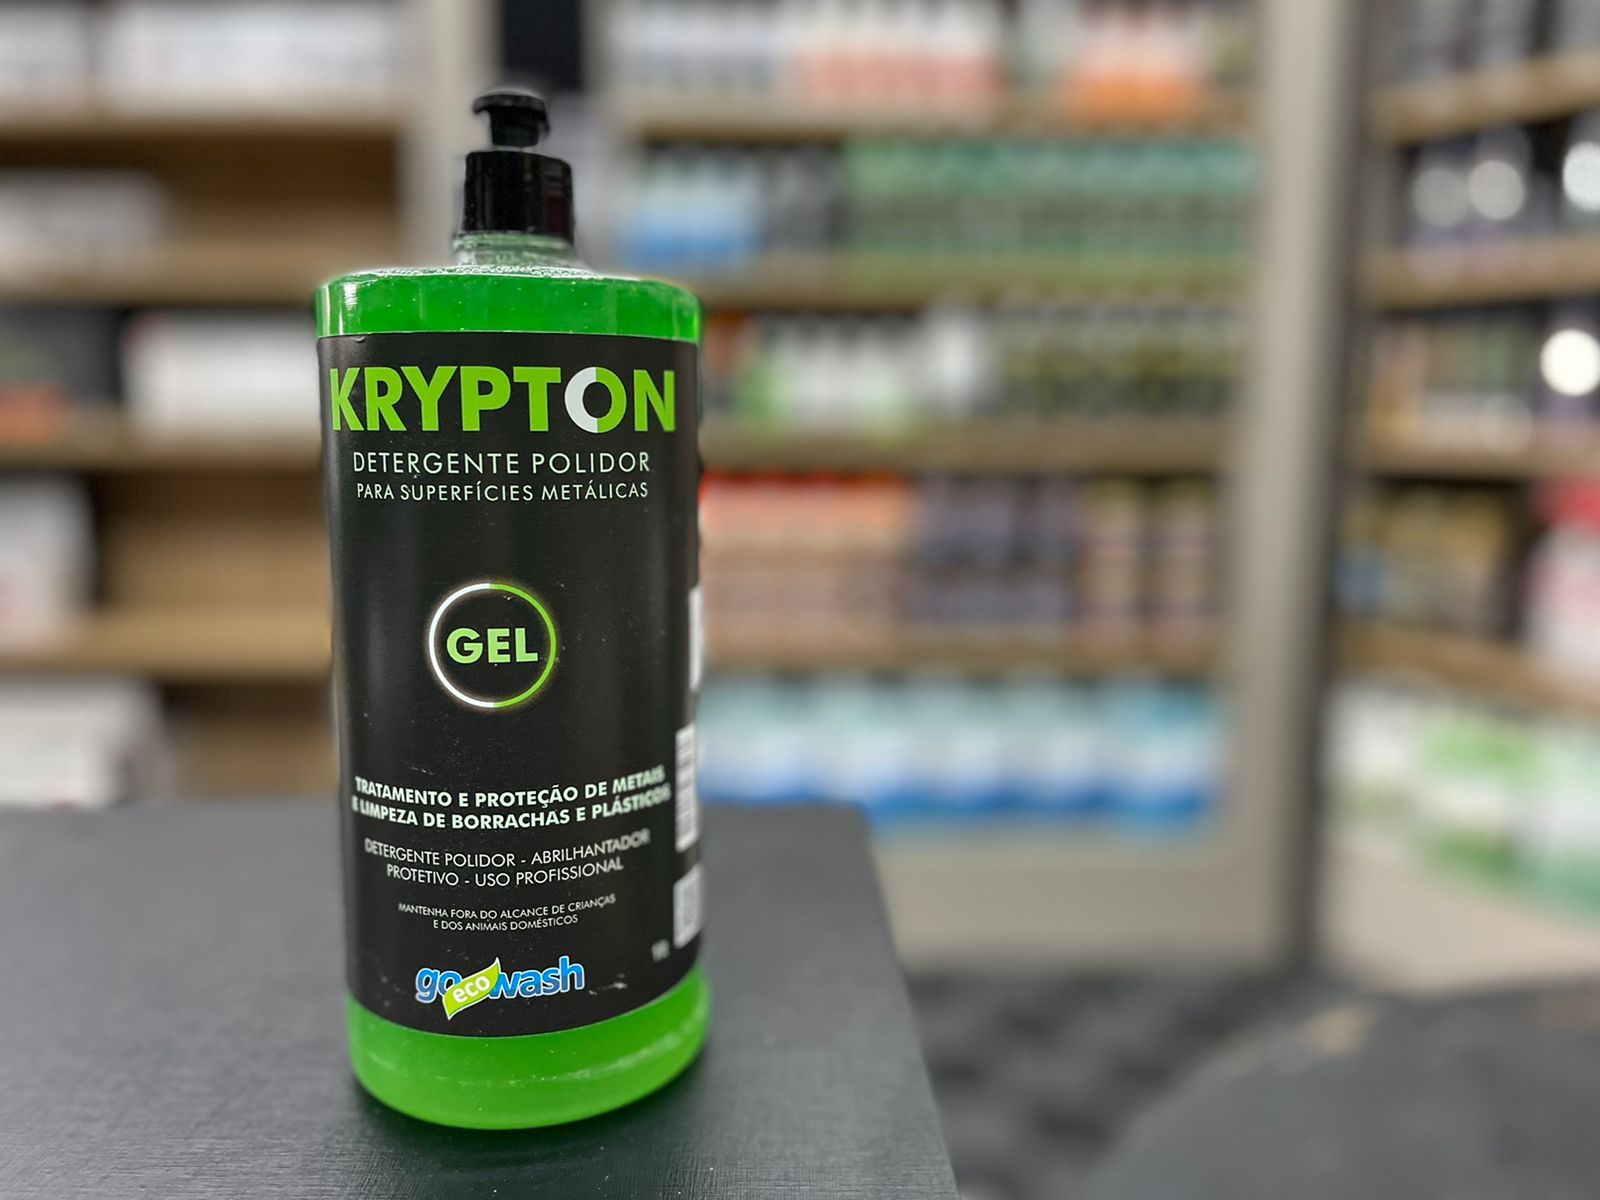 Krypton gel detergente polidor para metais, borrachas e plásticos 1L